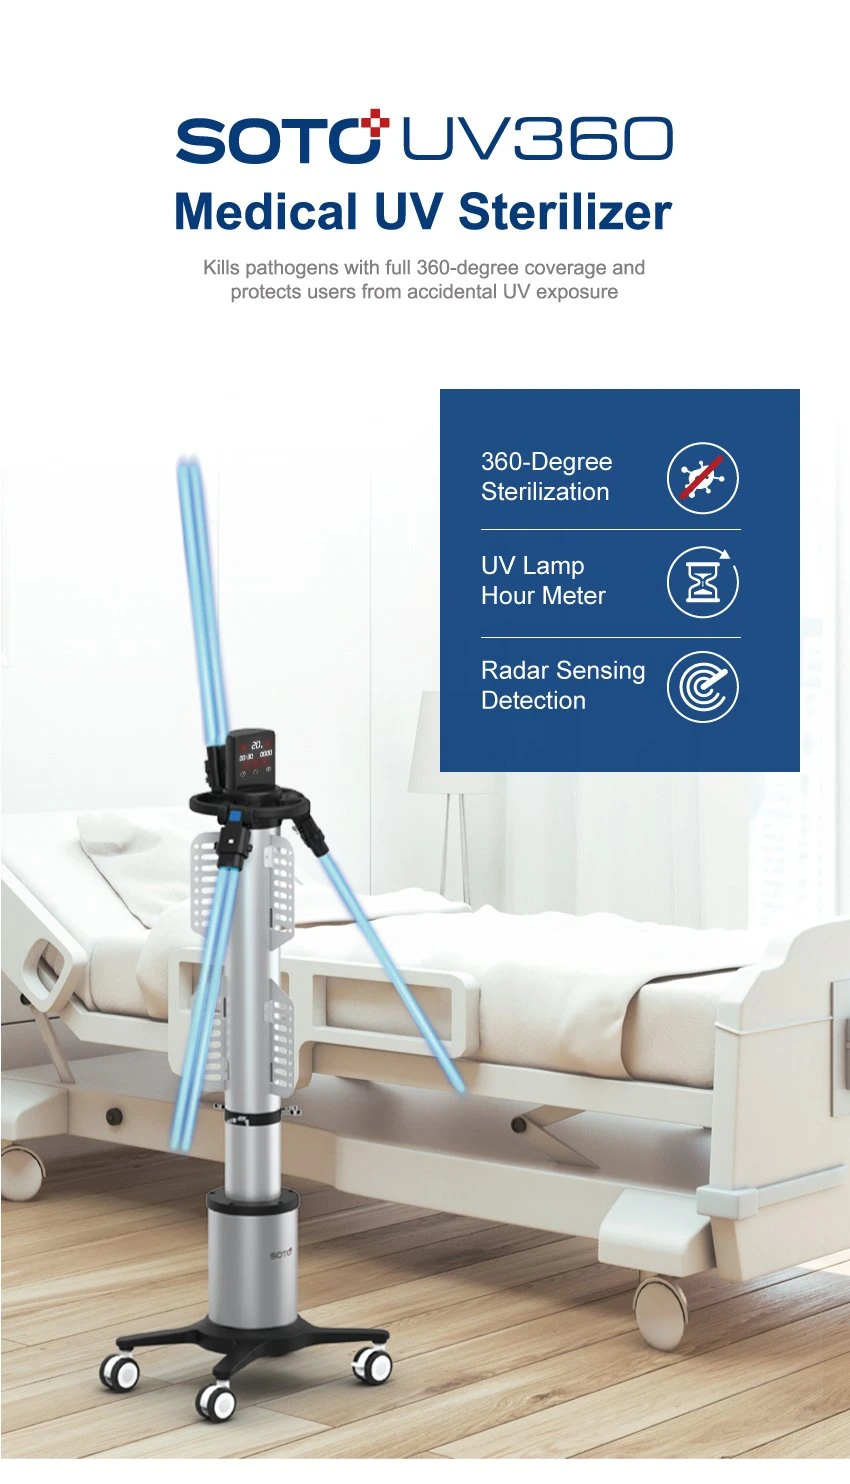 Soto-UV360 Medical UV Sterilizer Air Purifier Air Cleaner Air Disinfector Floor Standing Medical Air Purifier